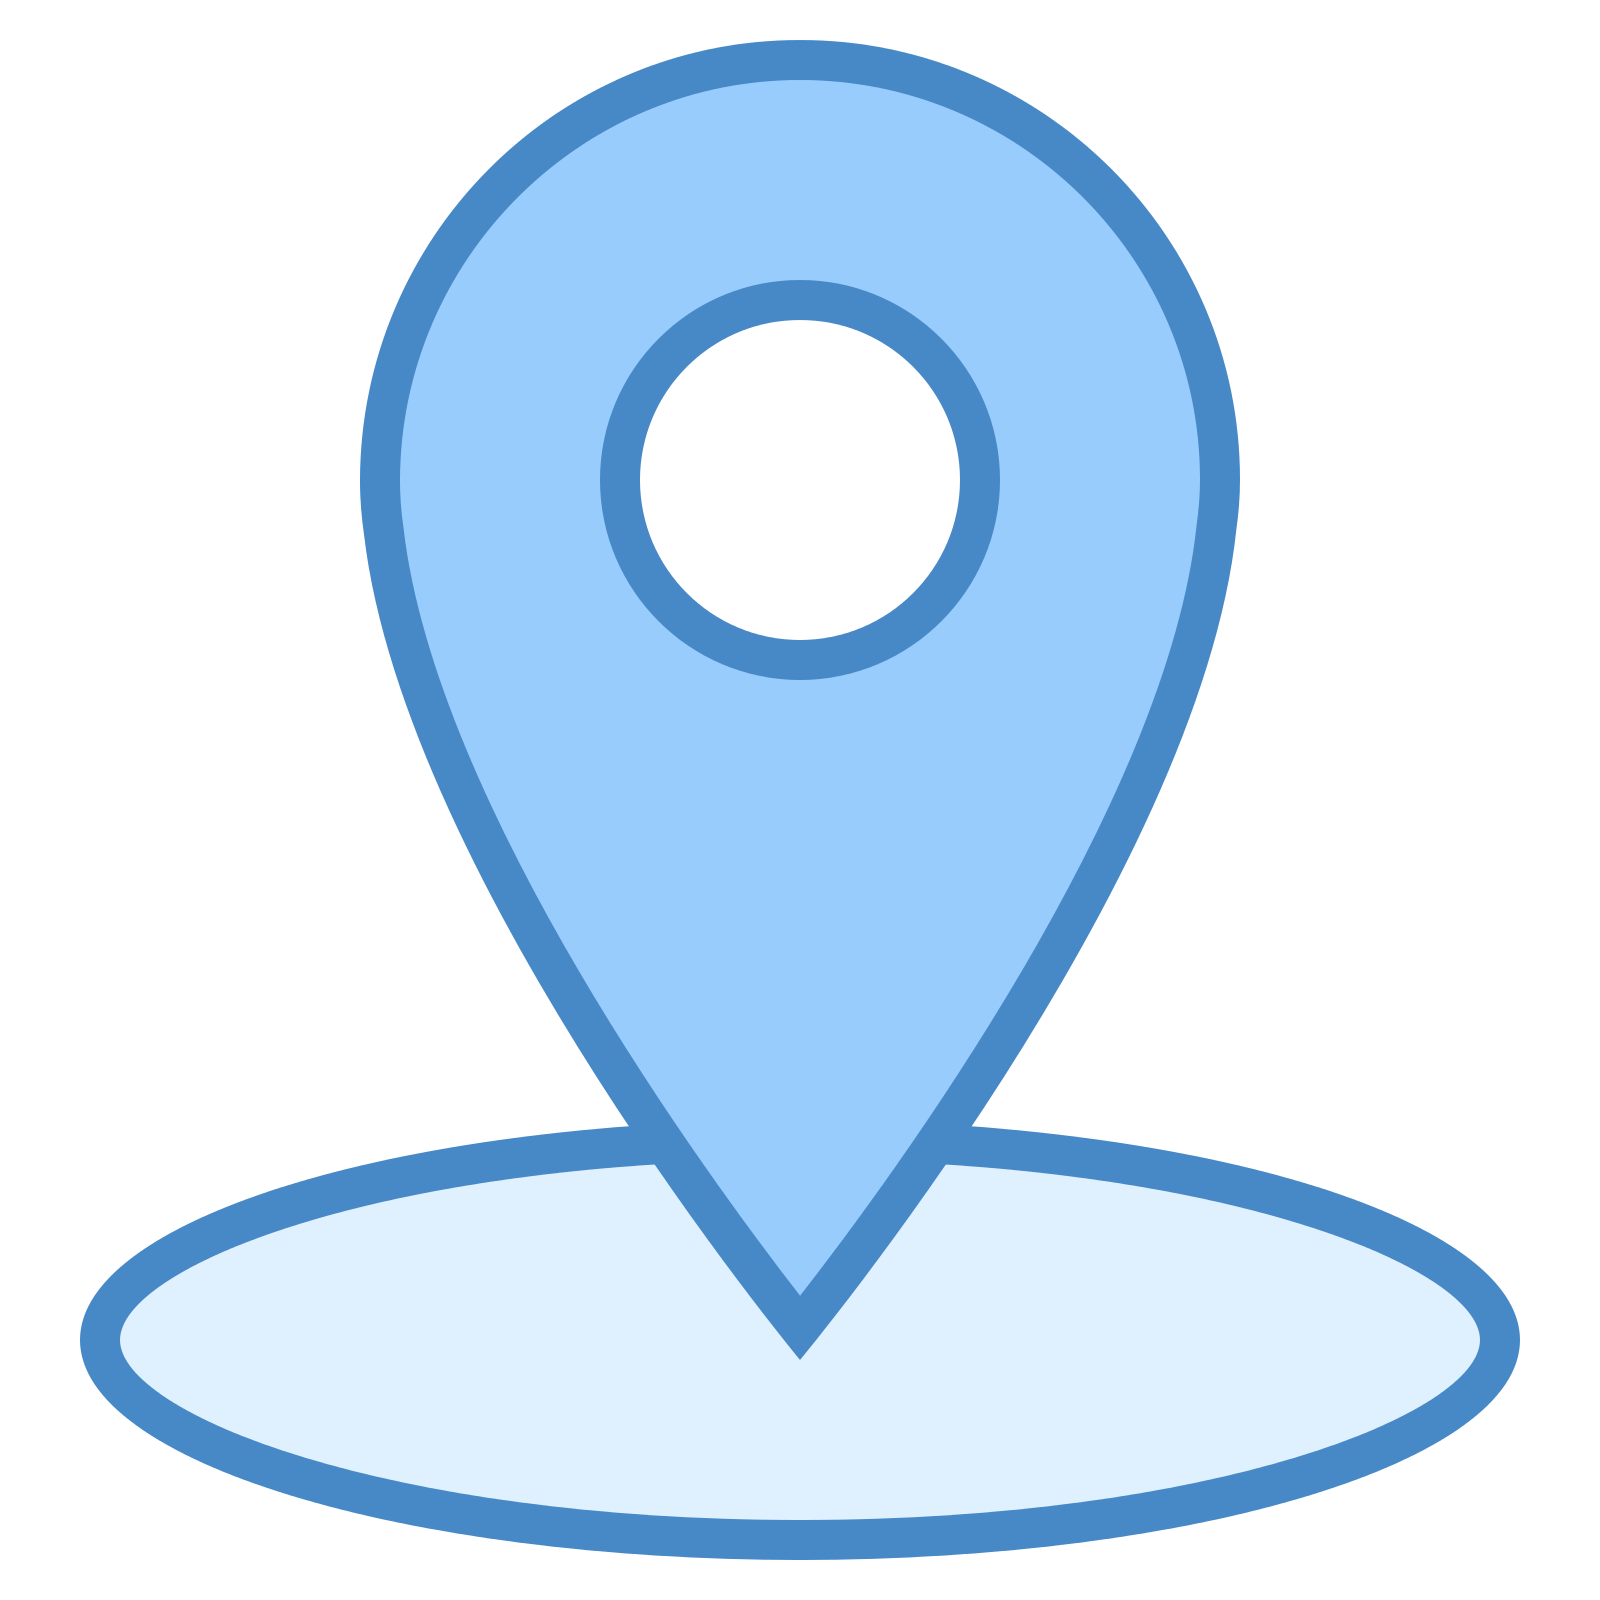 gps clipart location symbol